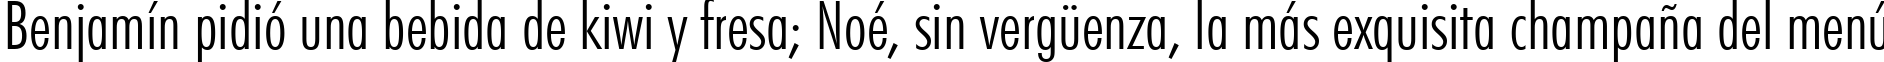 Пример написания шрифтом Futura Light Condensed BT текста на испанском